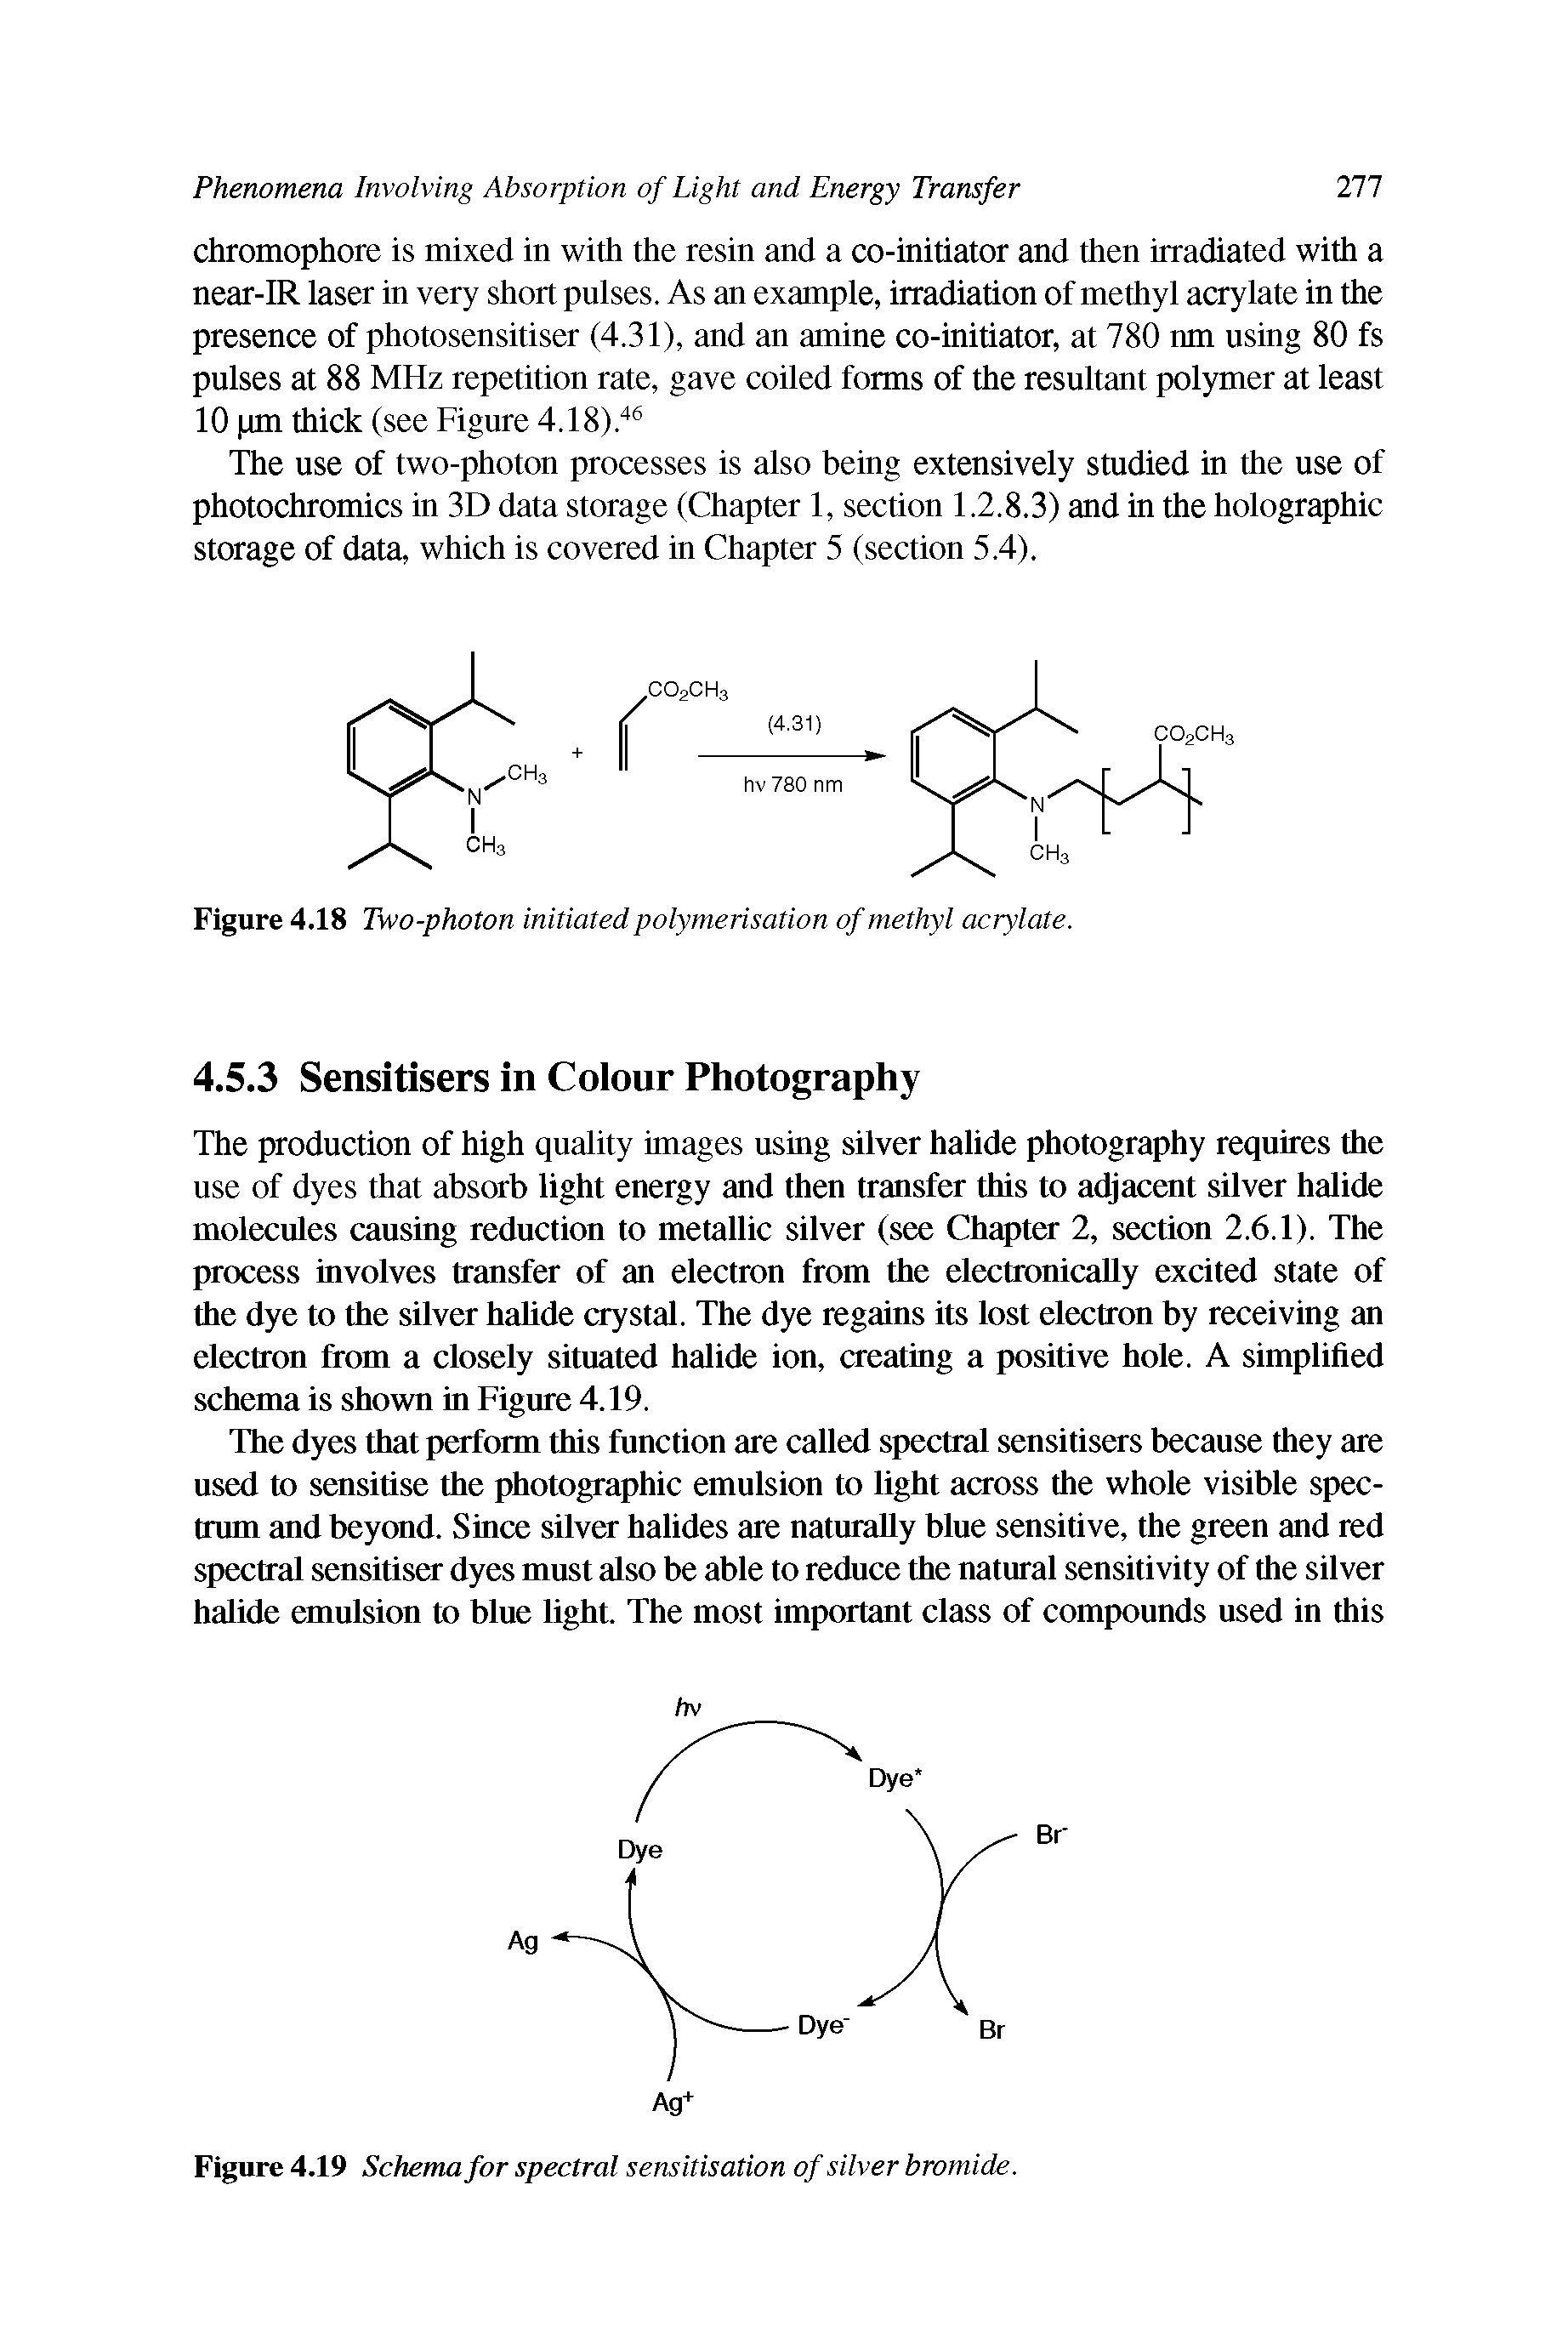 Figure 4.18 Two-photon initiated polymerisation of methyl acrylate.